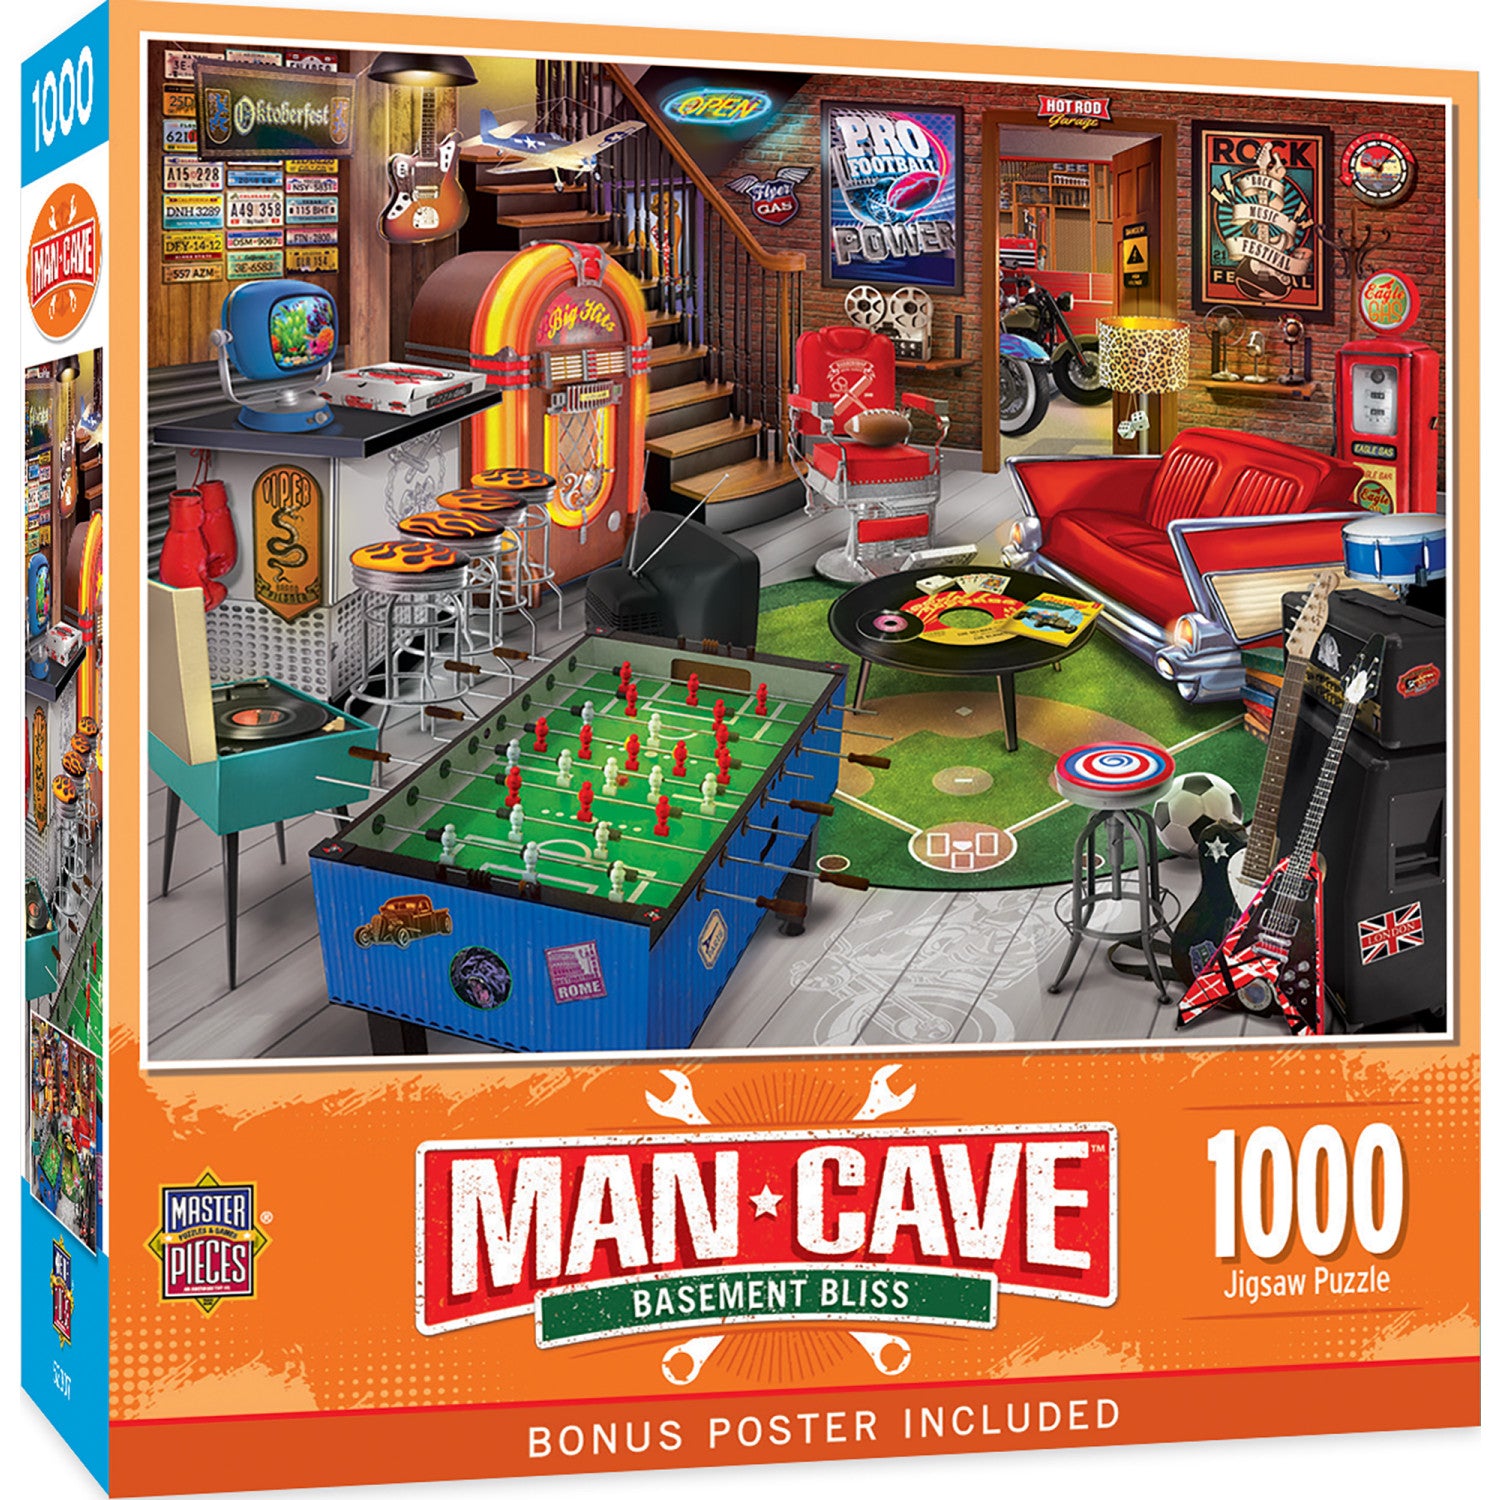 Man Cave - Basement Bliss 1000 Piece Jigsaw Puzzle